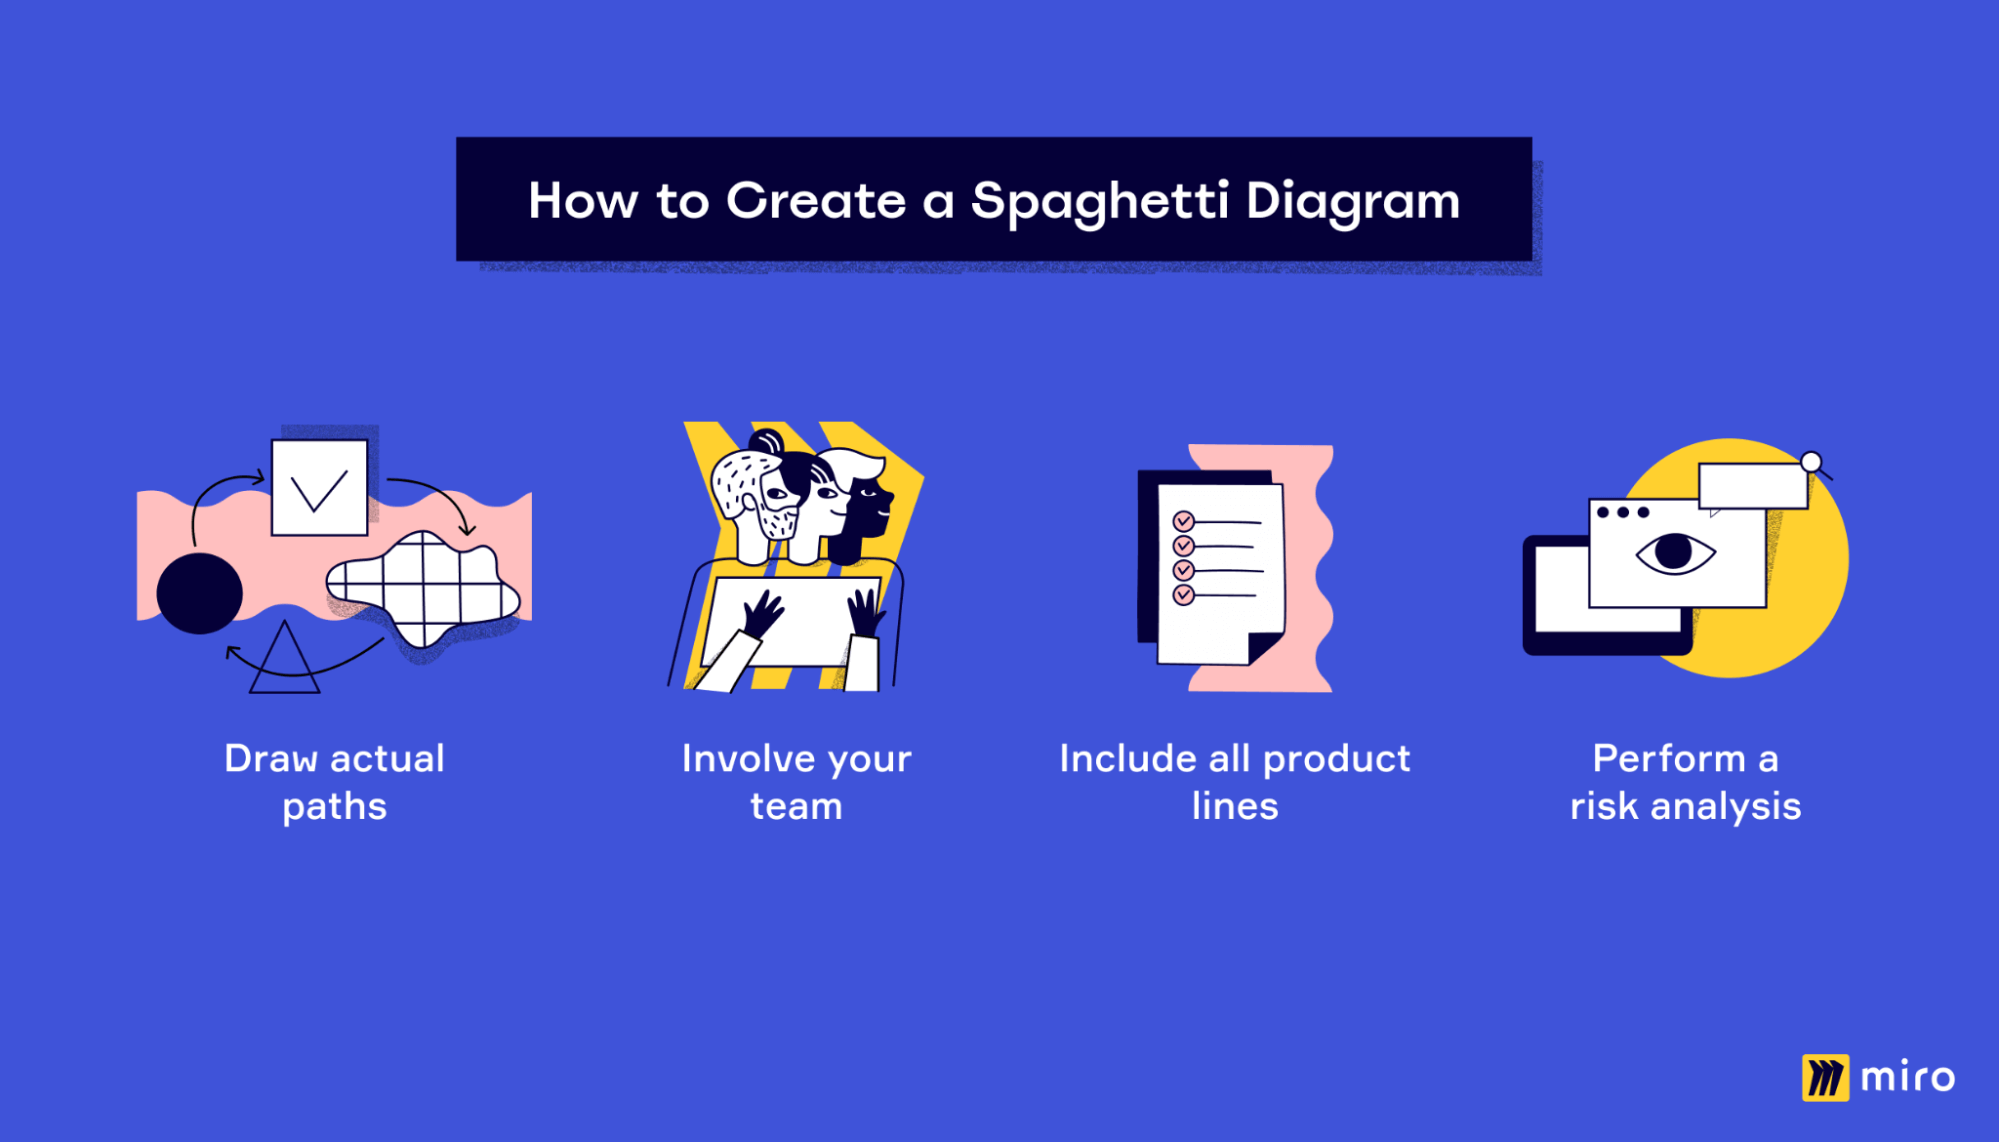 Tips to create a good Spaghetti Diagram